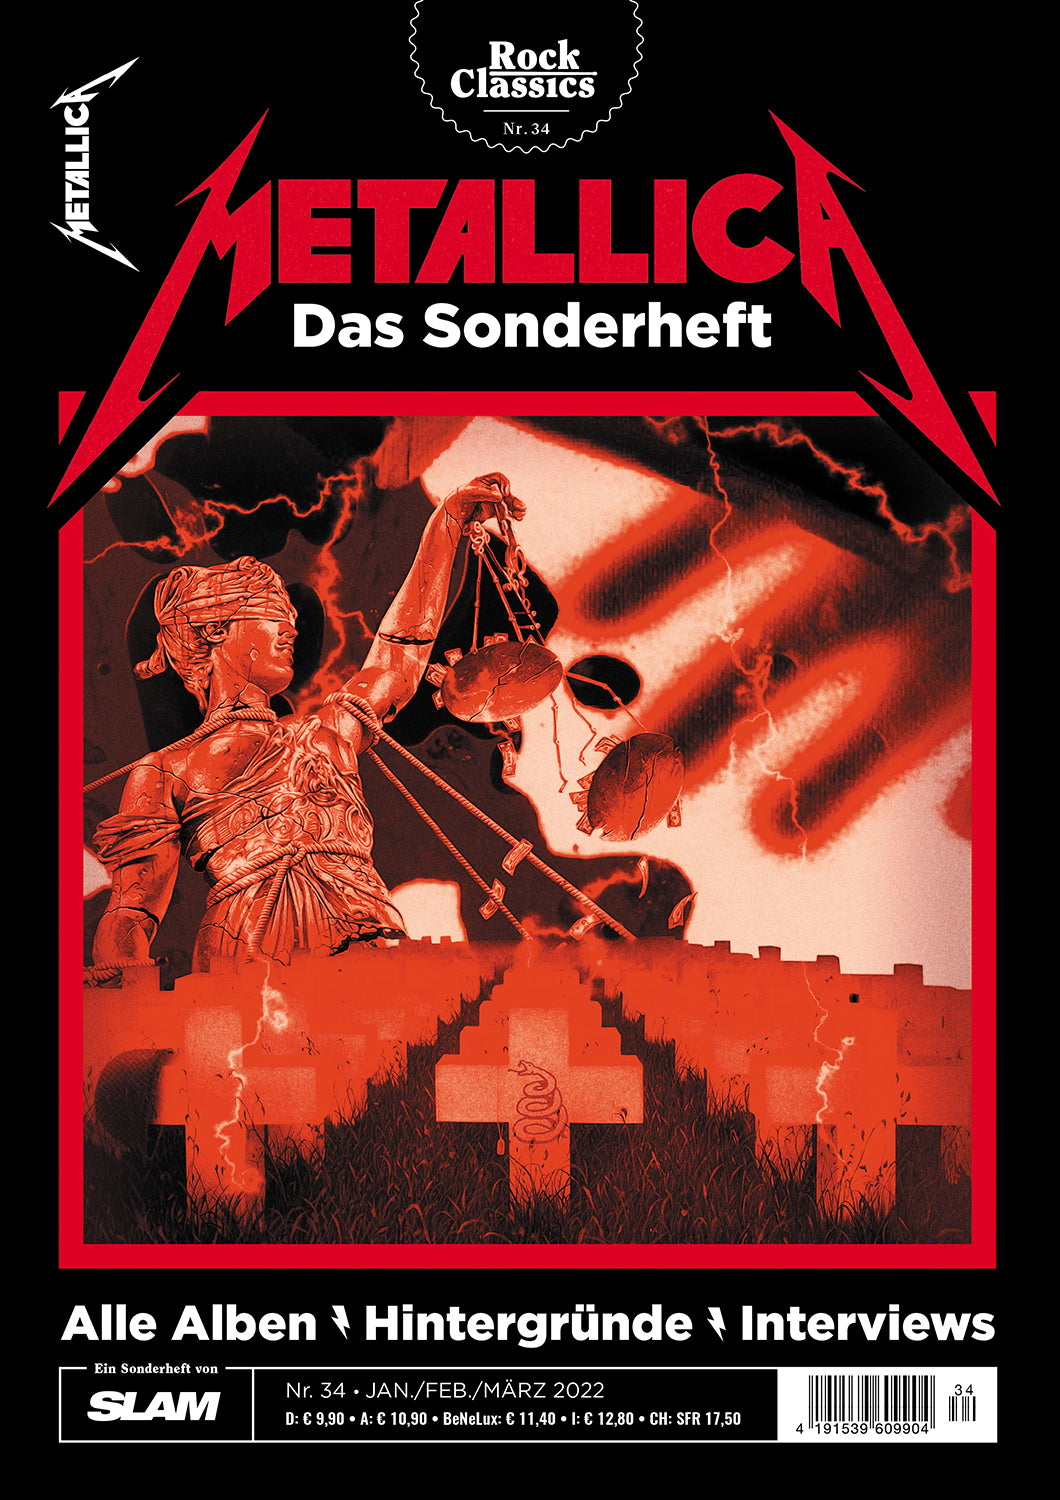 METALLICA - Das Sonderheft (ROCK CLASSICS #34) - limitierte Version MIT CD